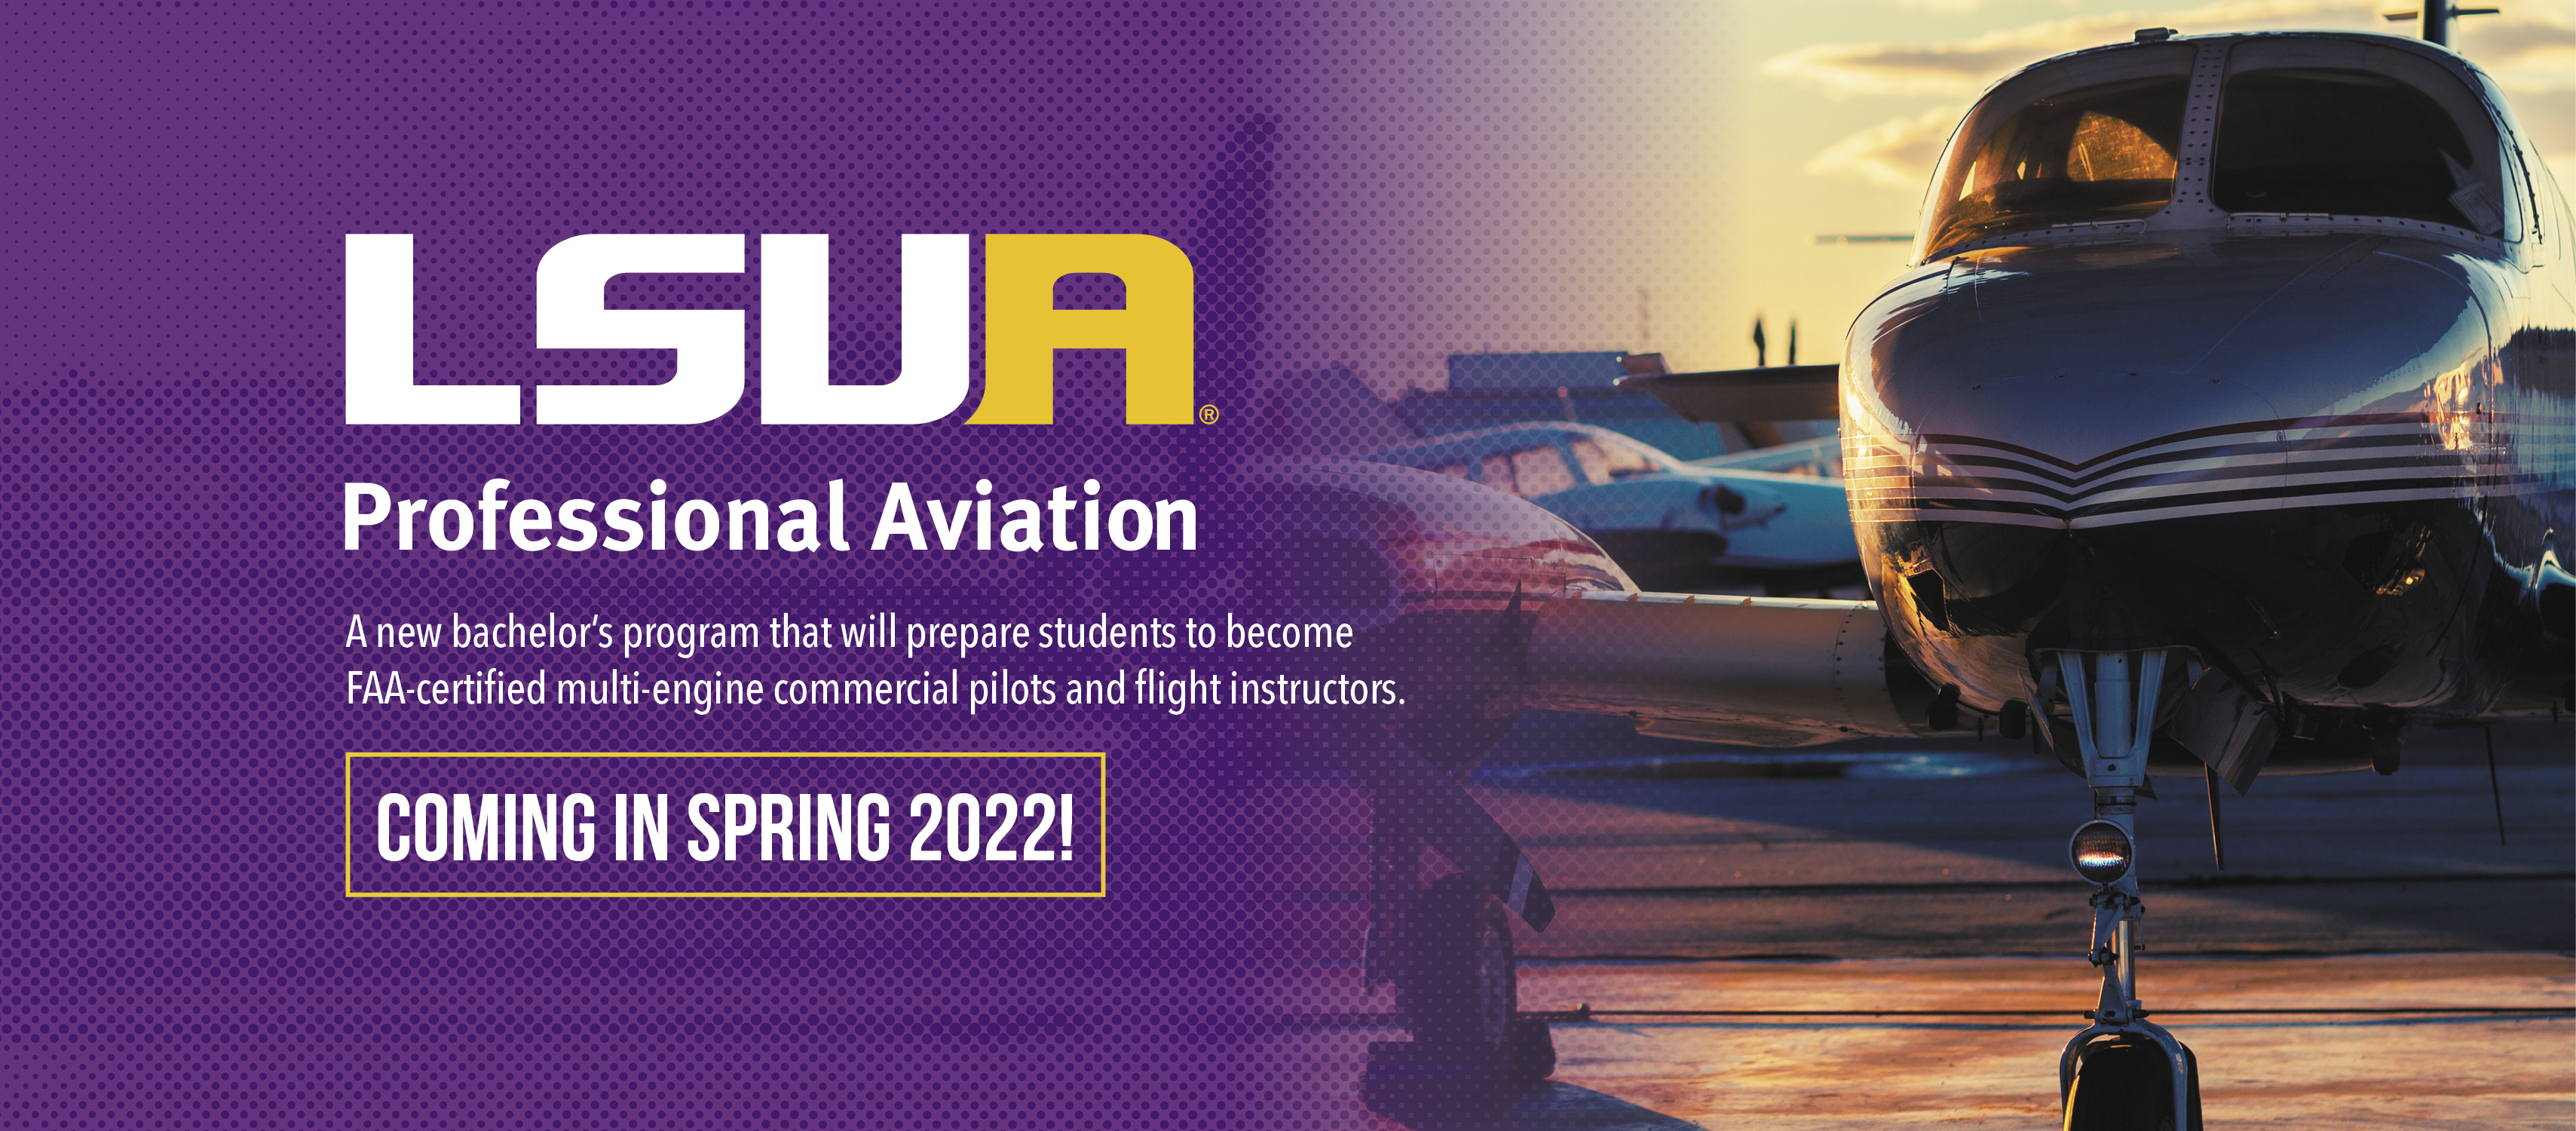 LSUA Professional Aviation Program